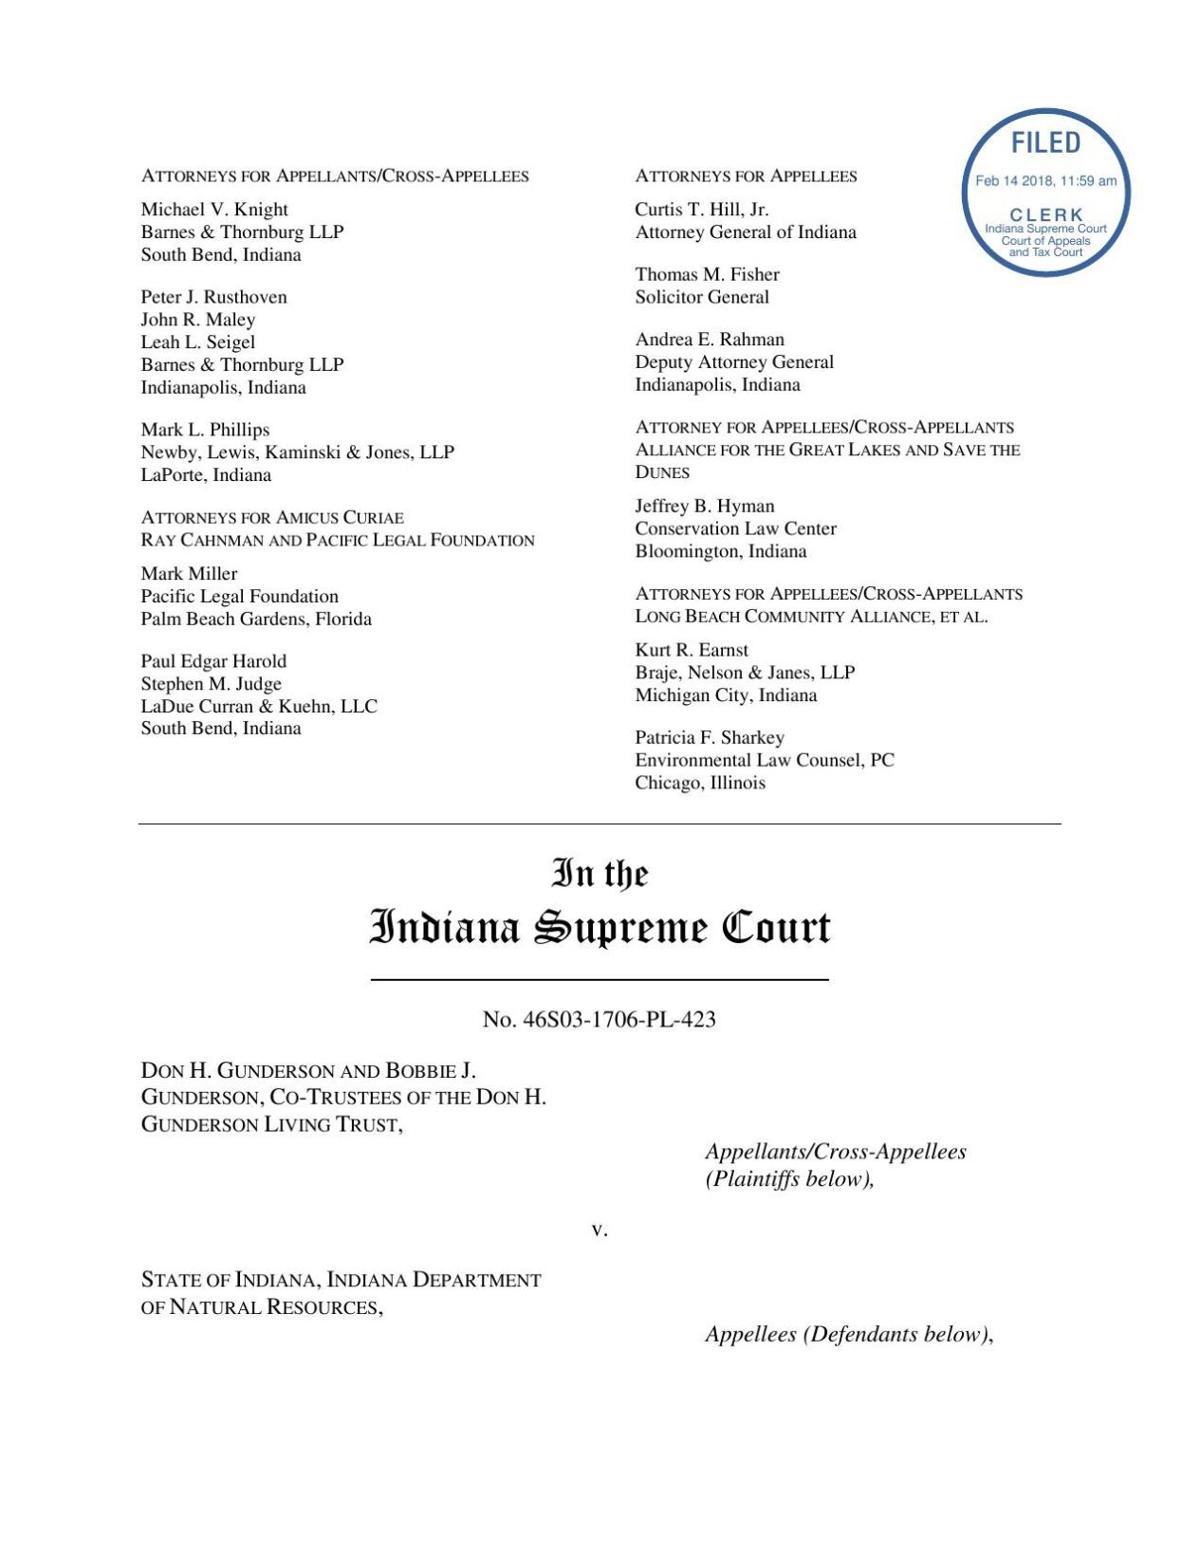 Gunderson v. State ruling of Indiana Supreme Court